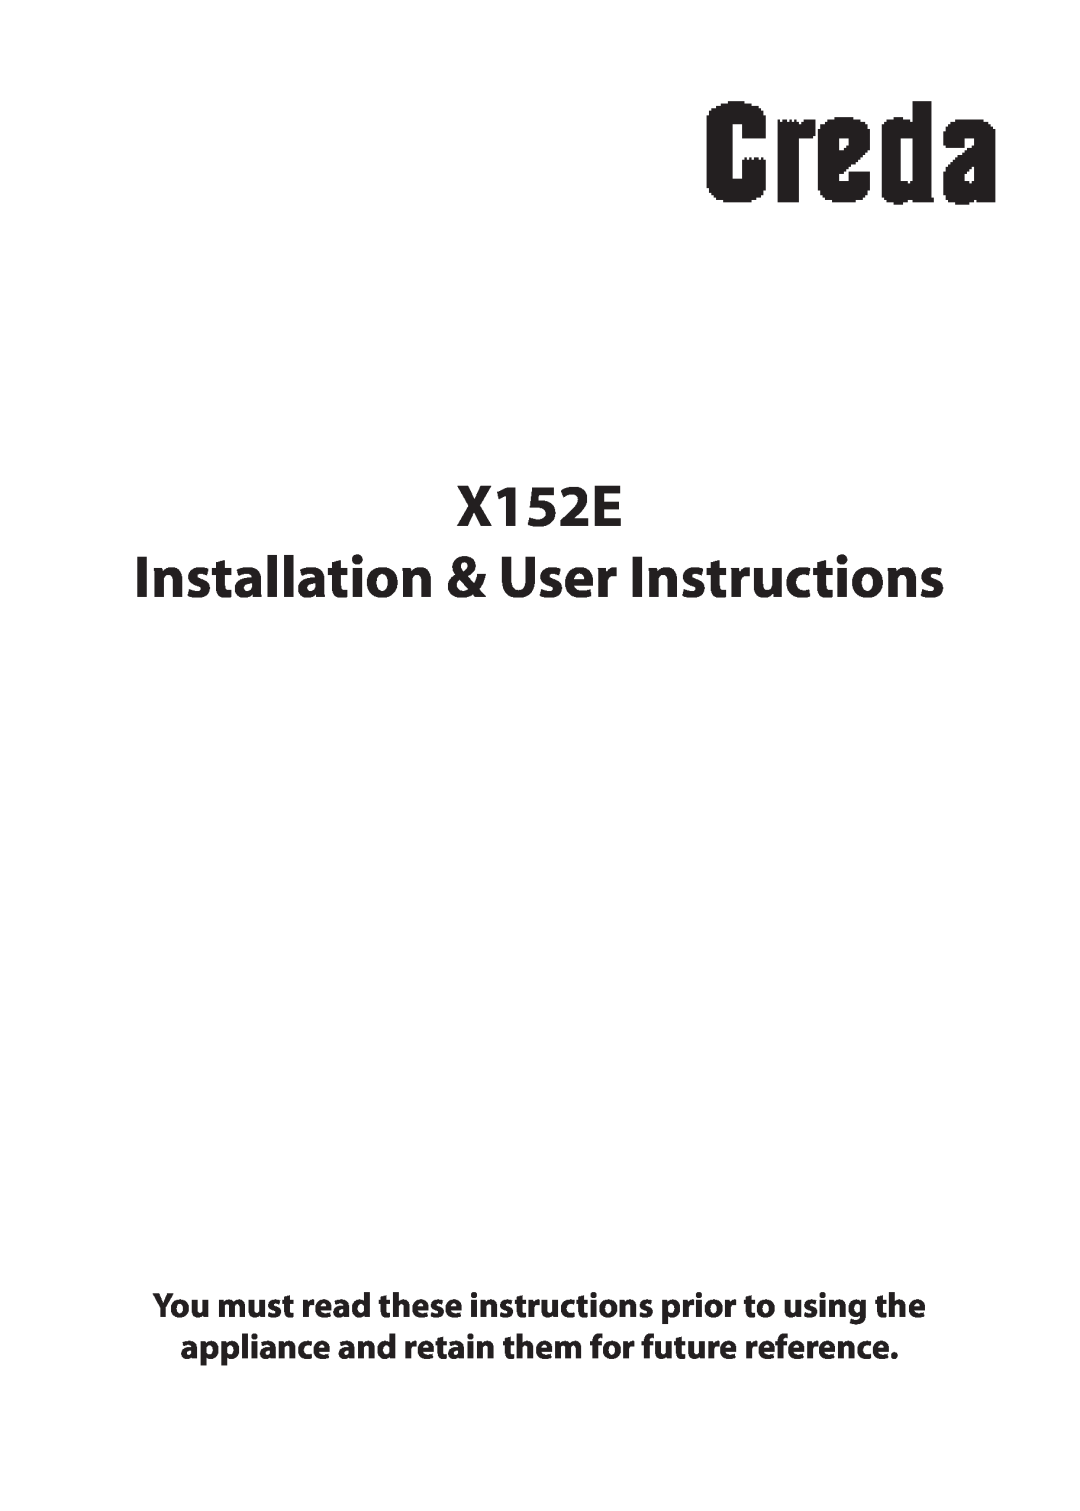 Creda manual X152E Installation & User Instructions 